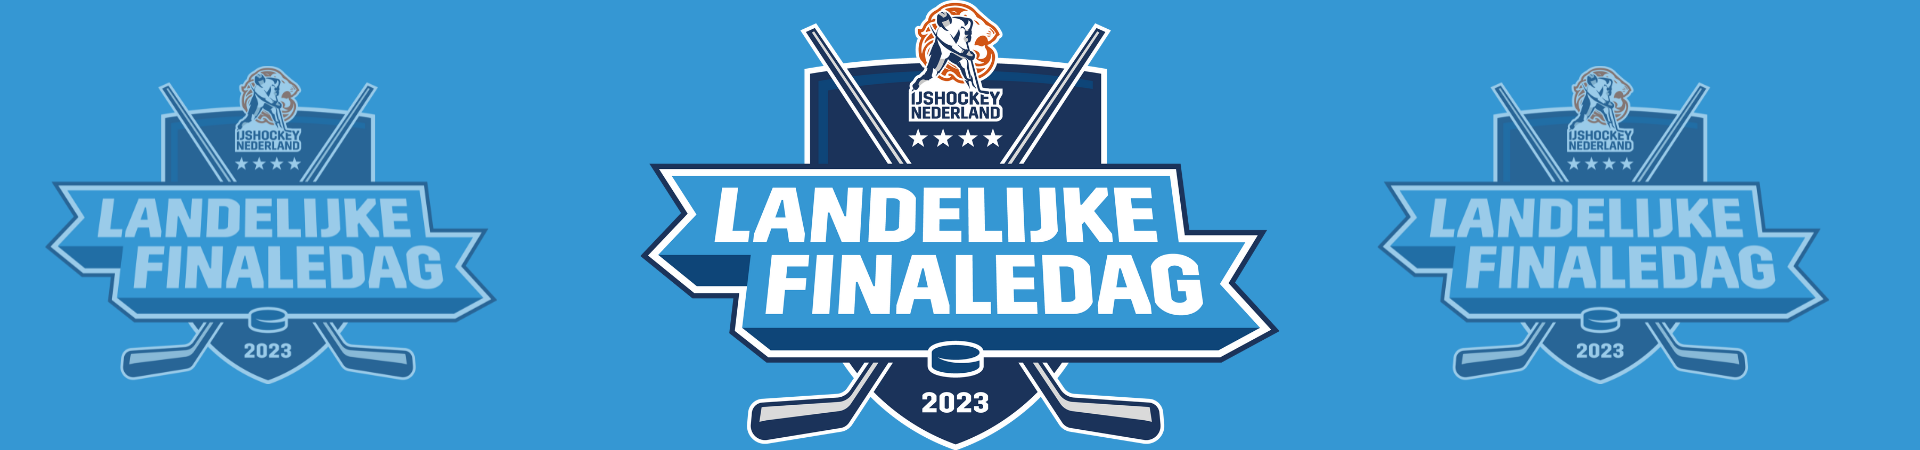 Landelijke Finaledag IJshockey 2023 Tickets